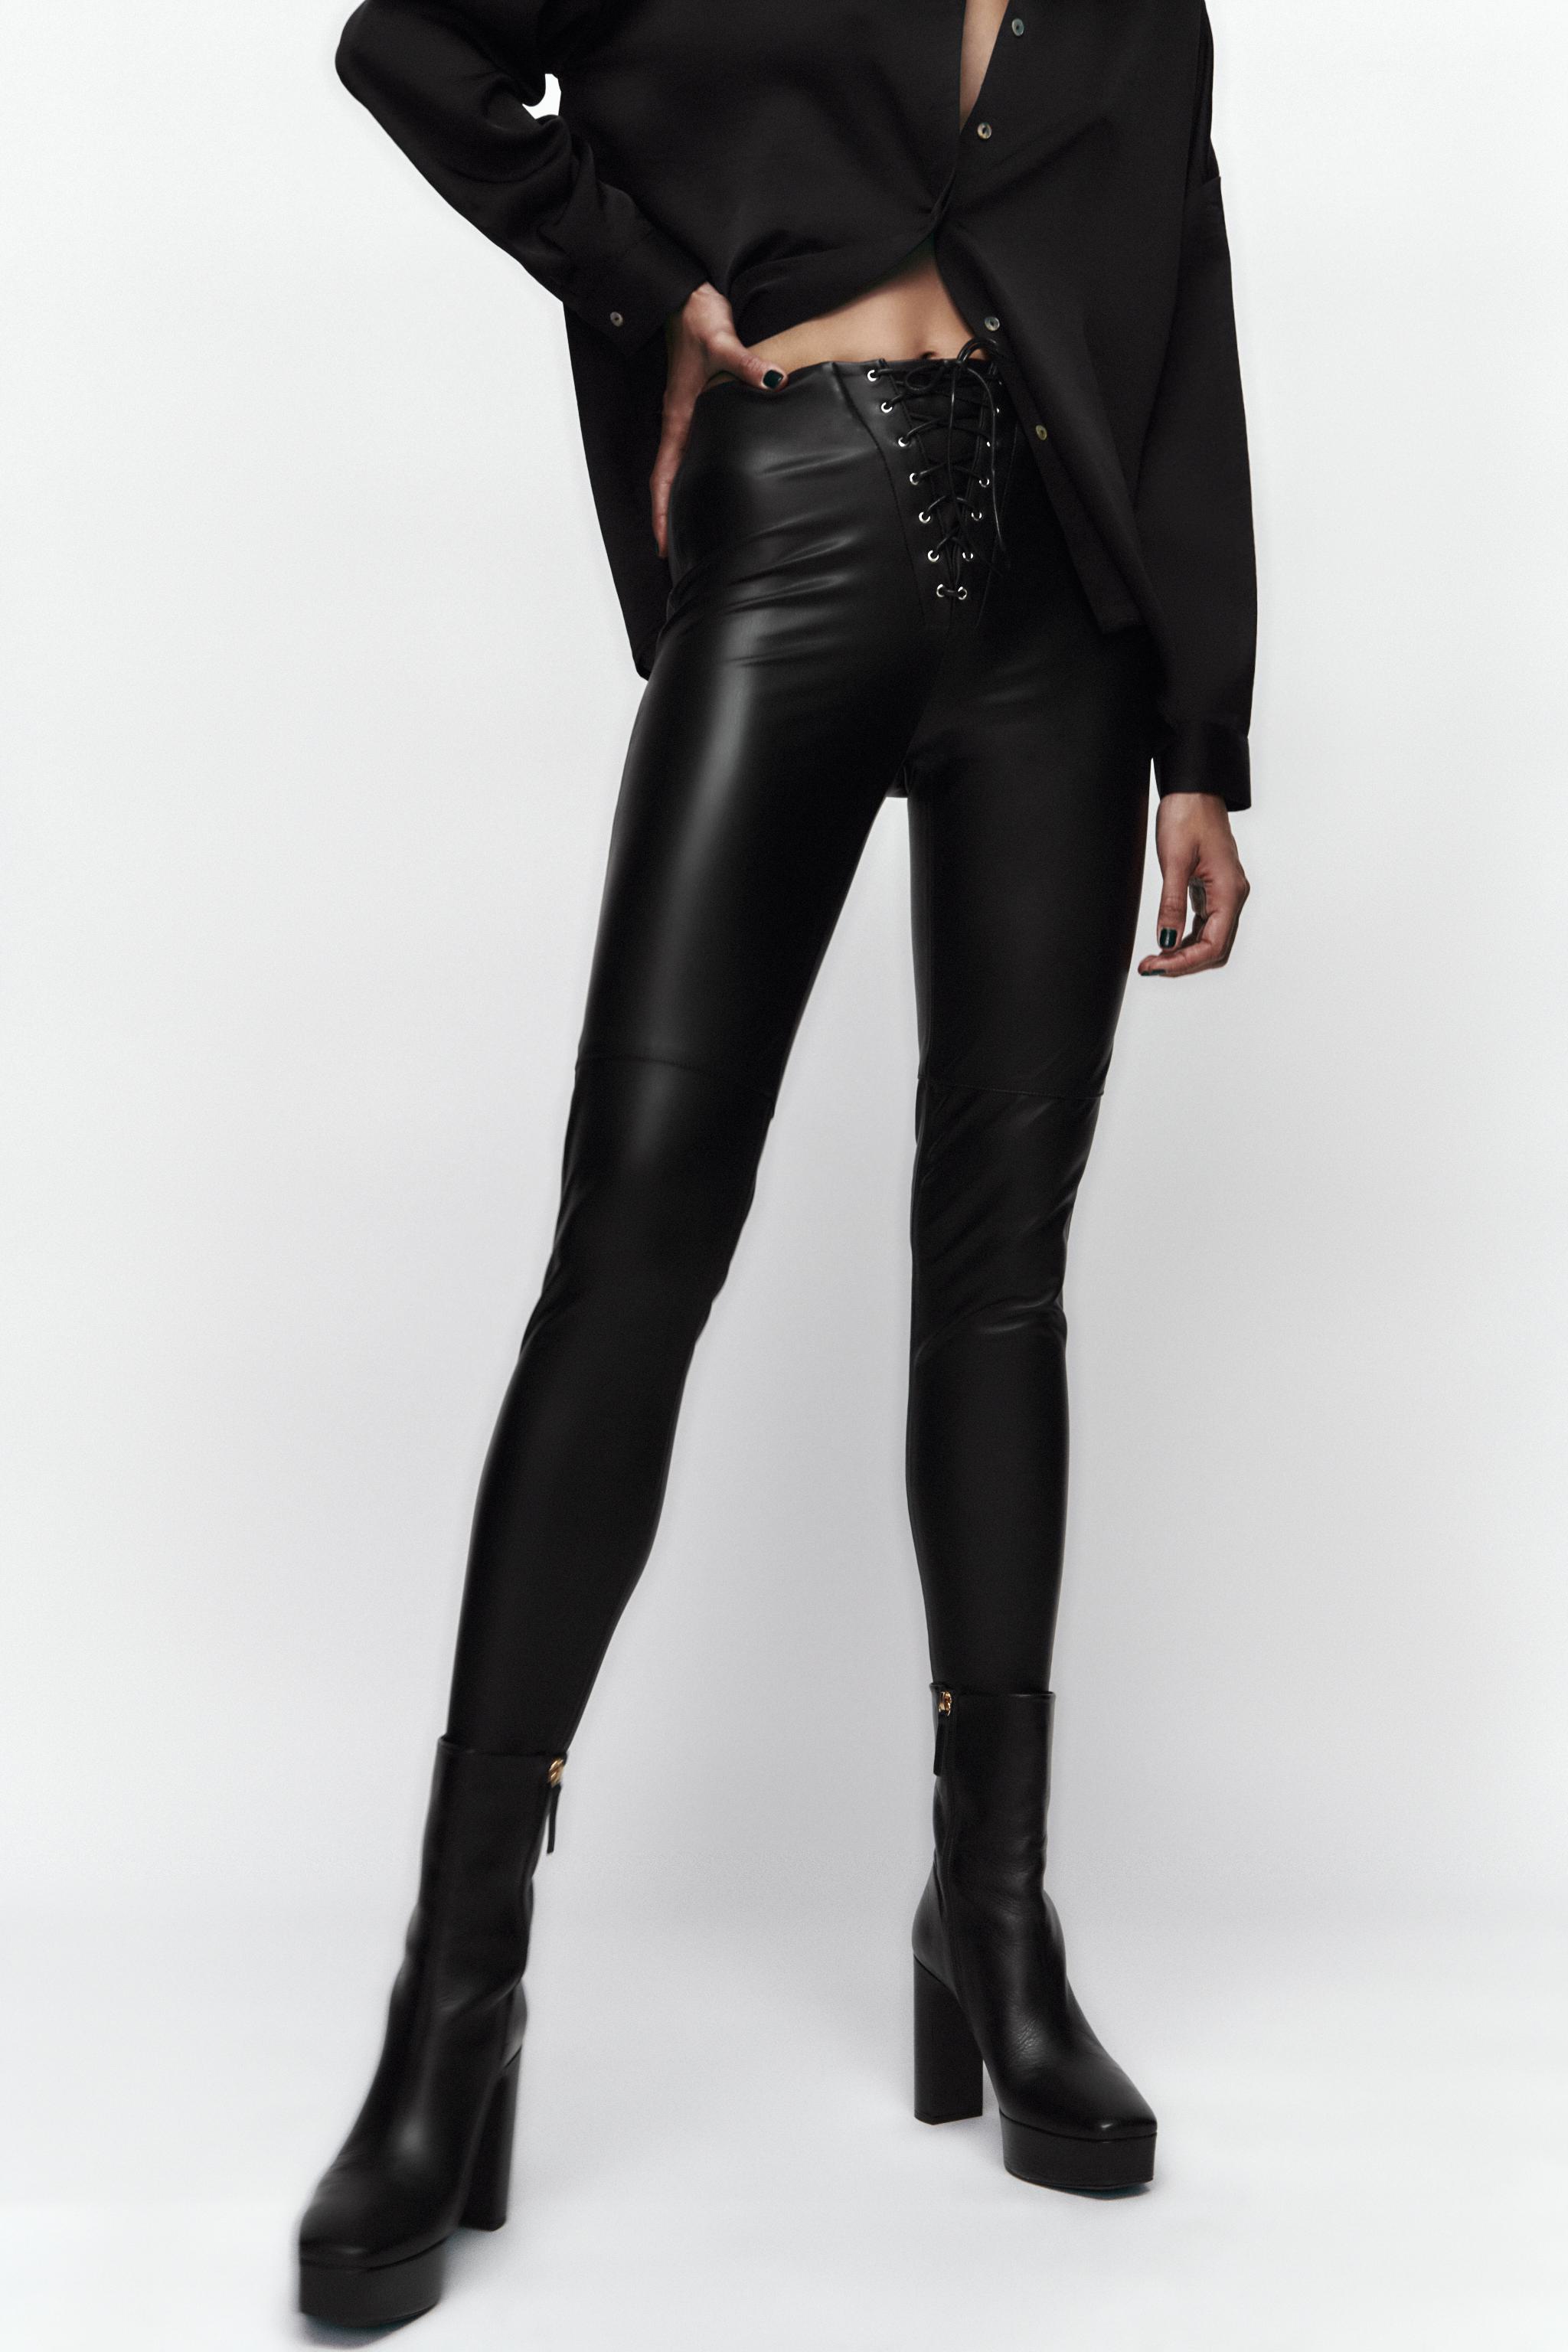 Zara, Pants & Jumpsuits, Zara Faux Leather Leggings